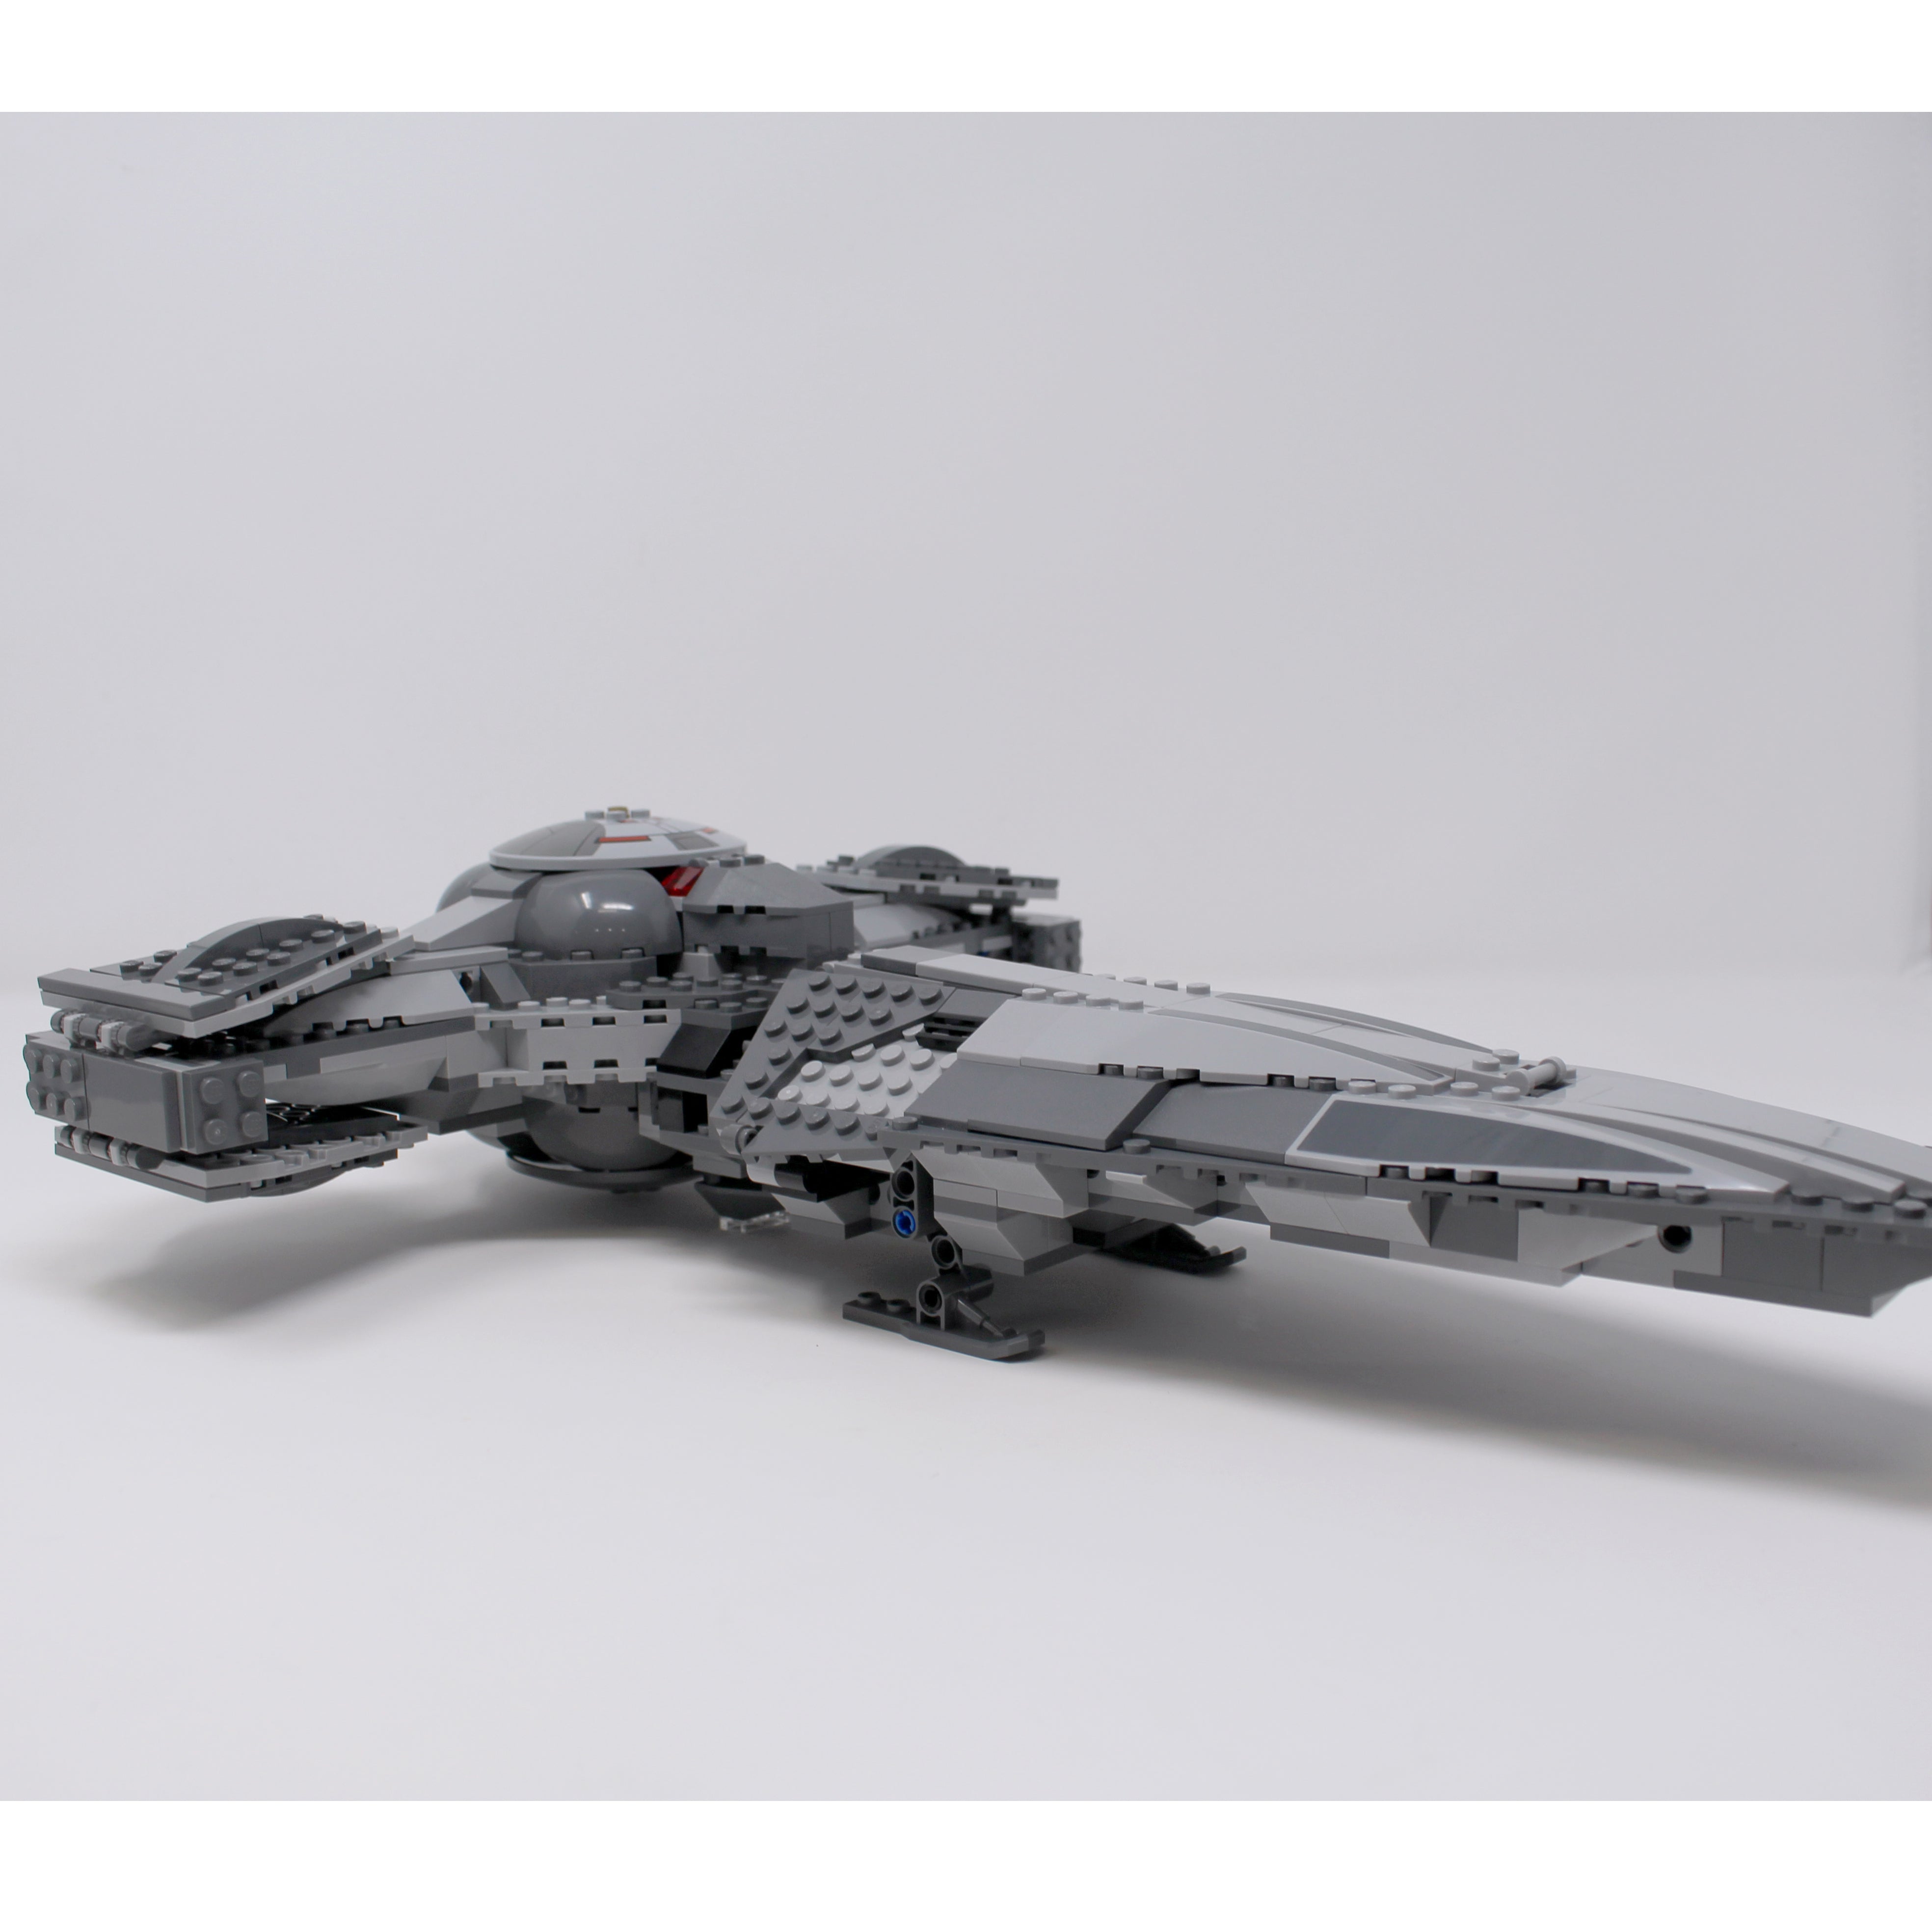 LEGO Star Wars Sith Infiltrator Set 75096 - US